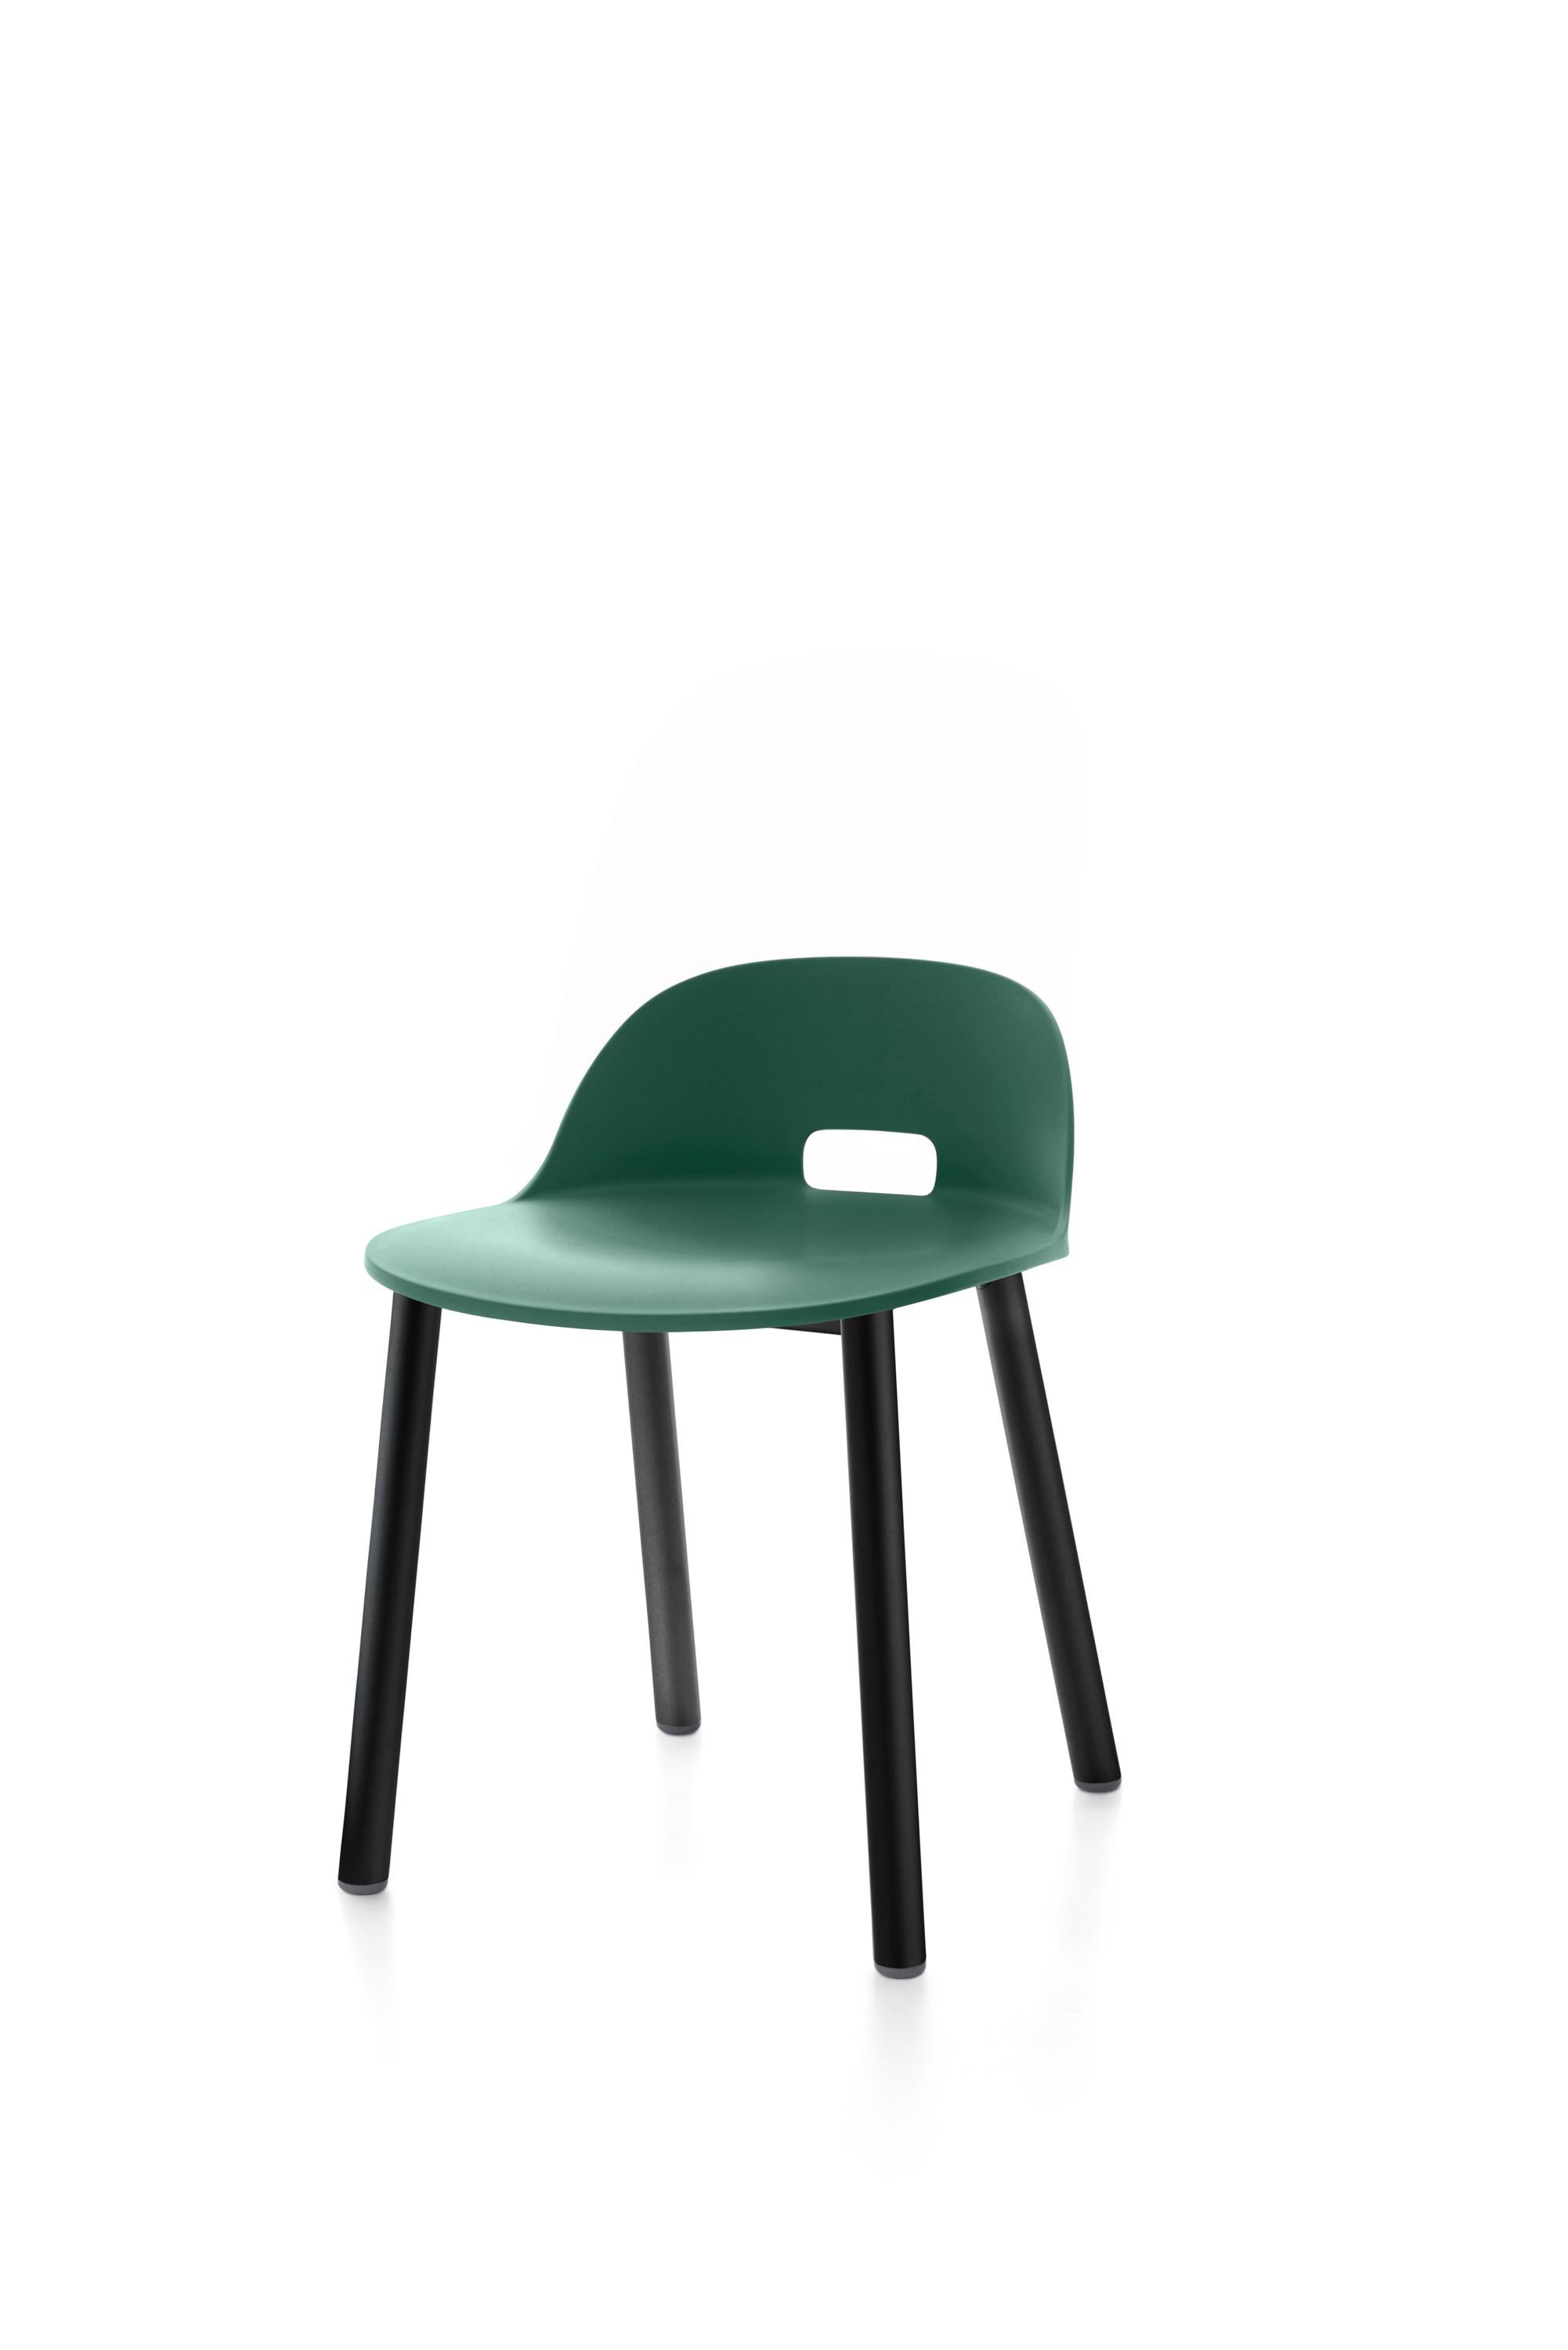 For Sale: Green (Alfi Green) Emeco Alfi Low Back Chair with Black Powder-Coated Aluminum Frame by Jasper